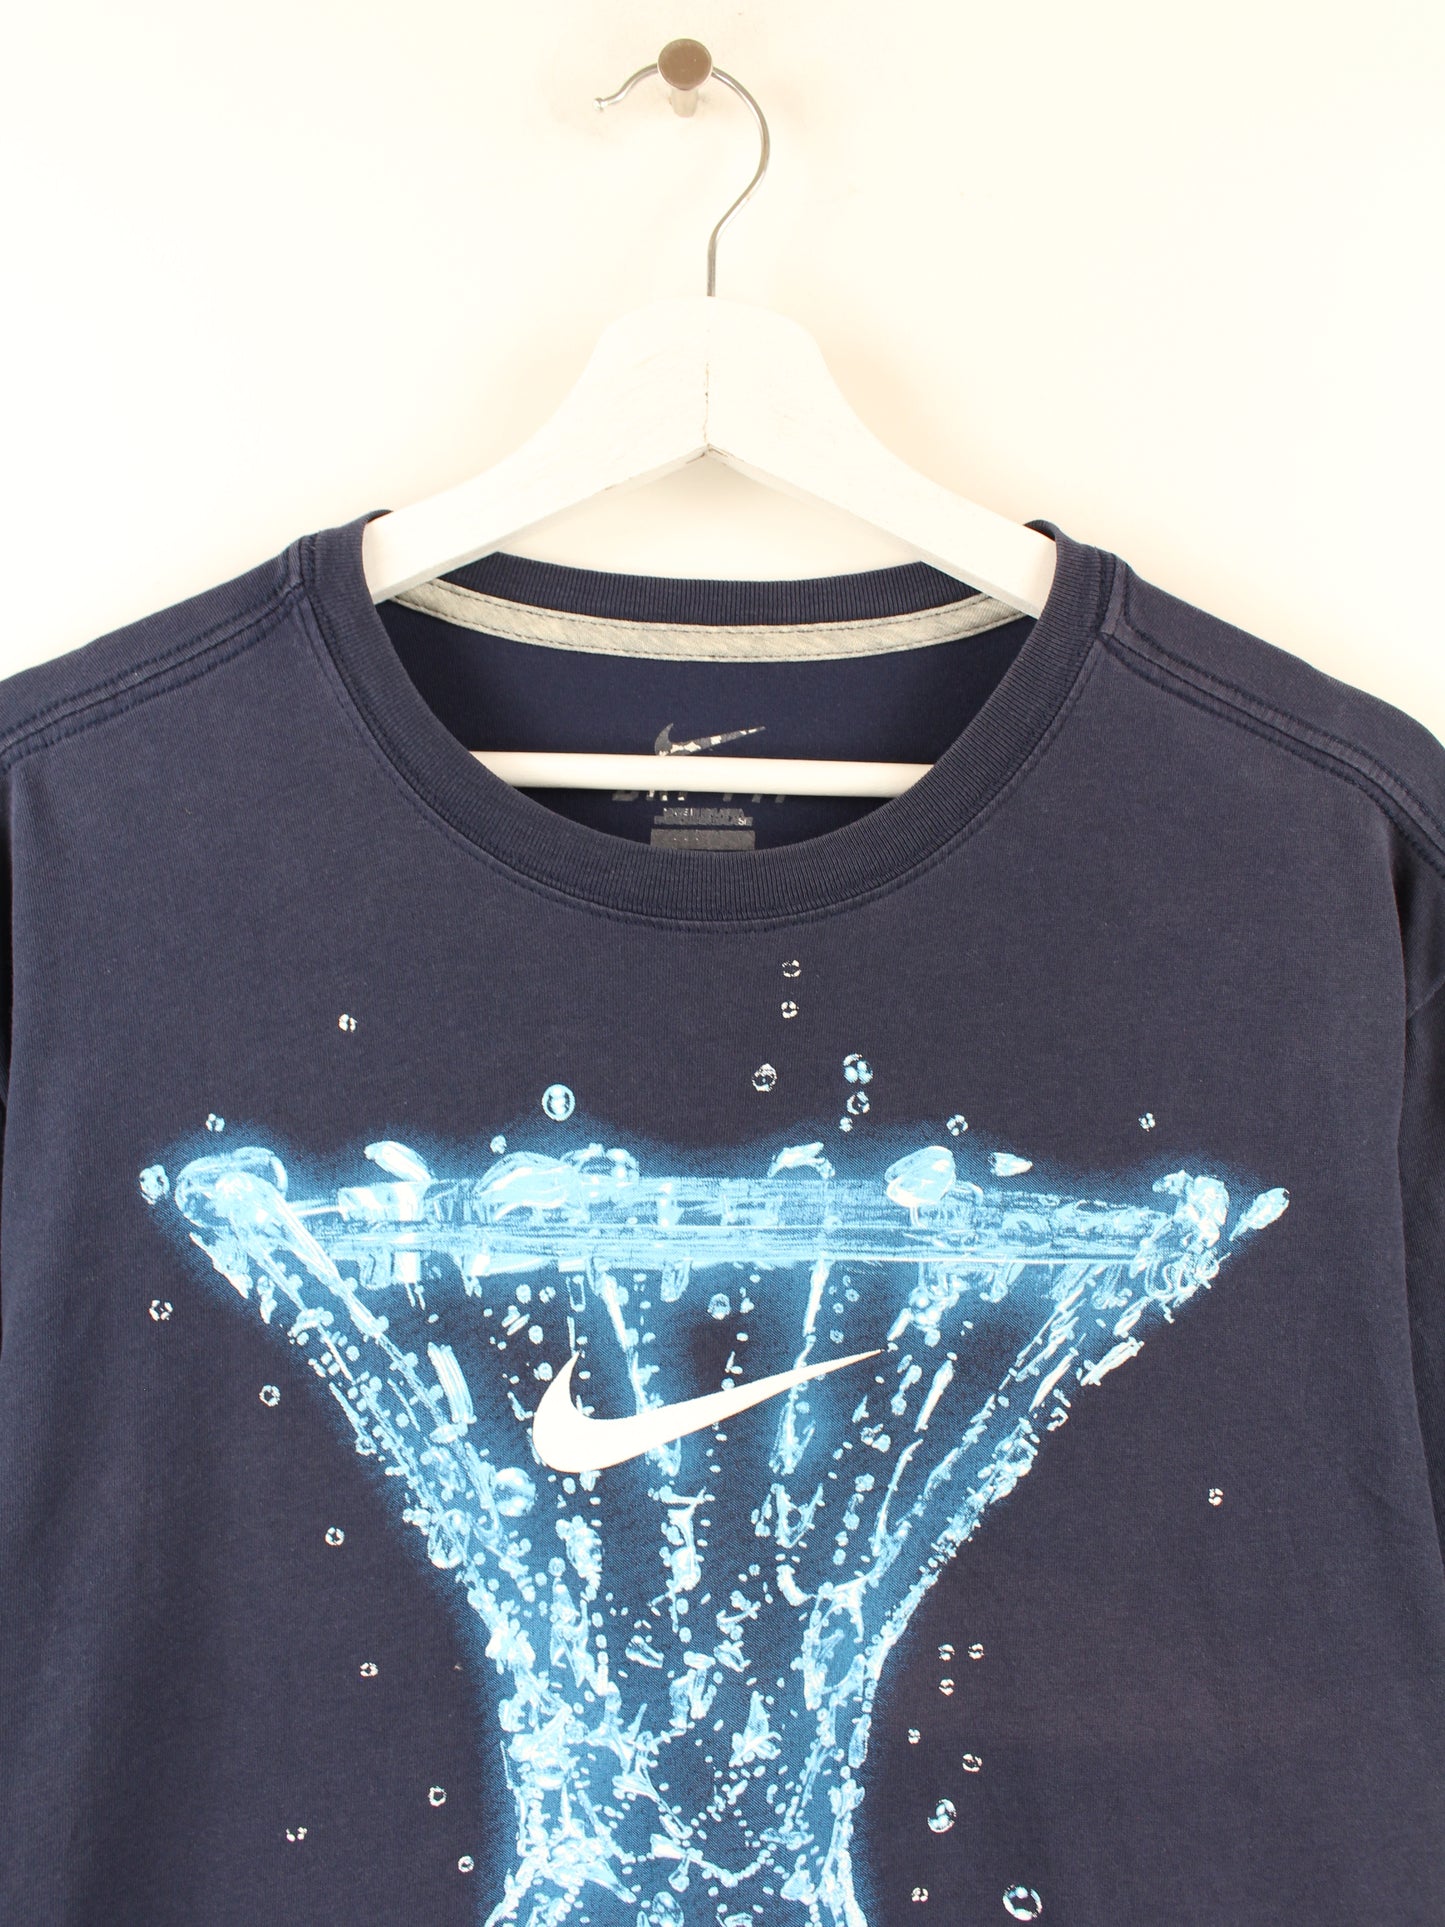 Nike Print T-Shirt Blue M